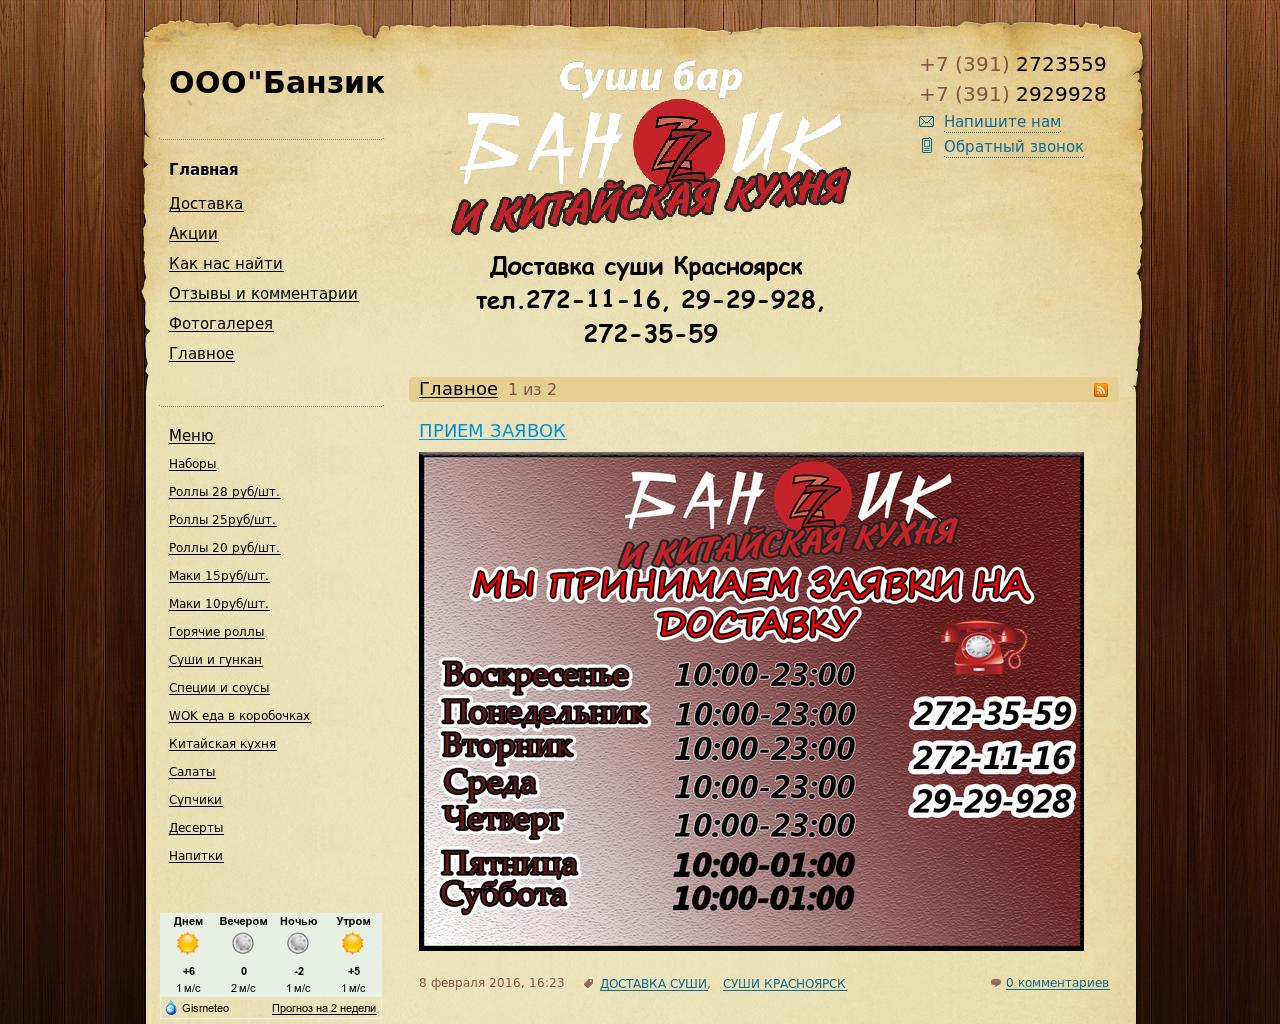 Изображение сайта banzzik.ru в разрешении 1280x1024